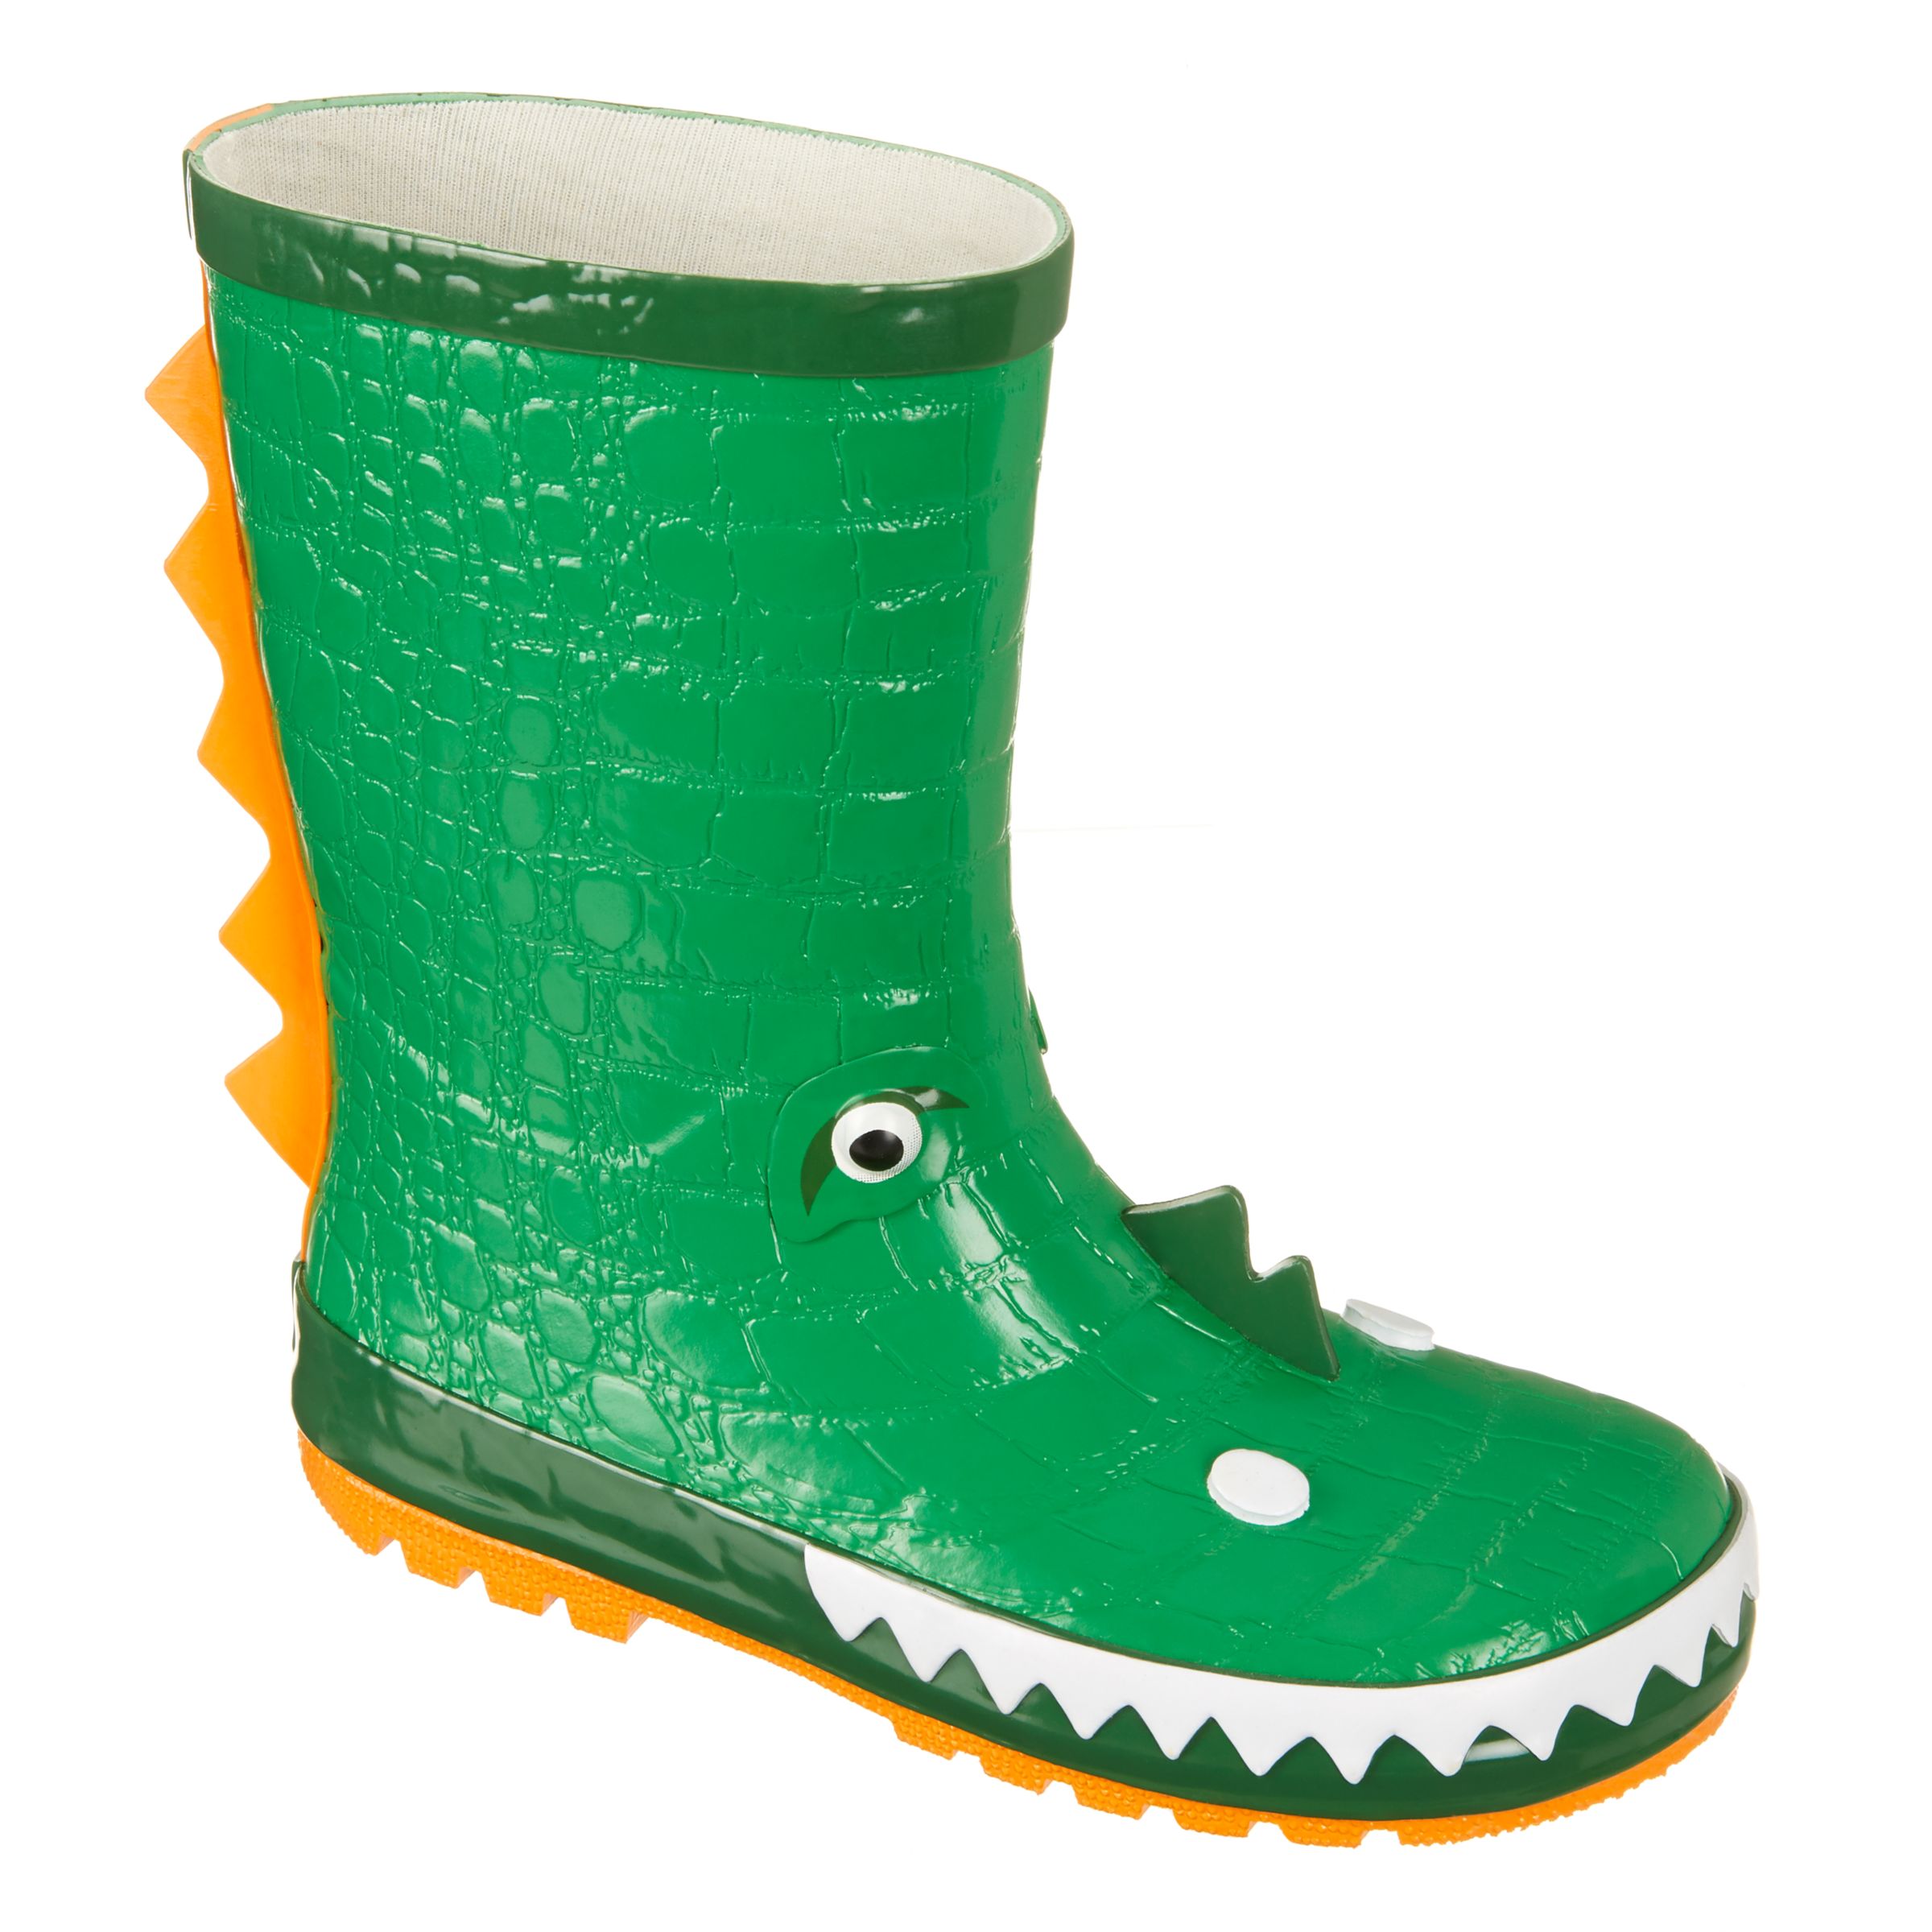 John Lewis & Partners Children's 3D Monster Wellington Boots, Green